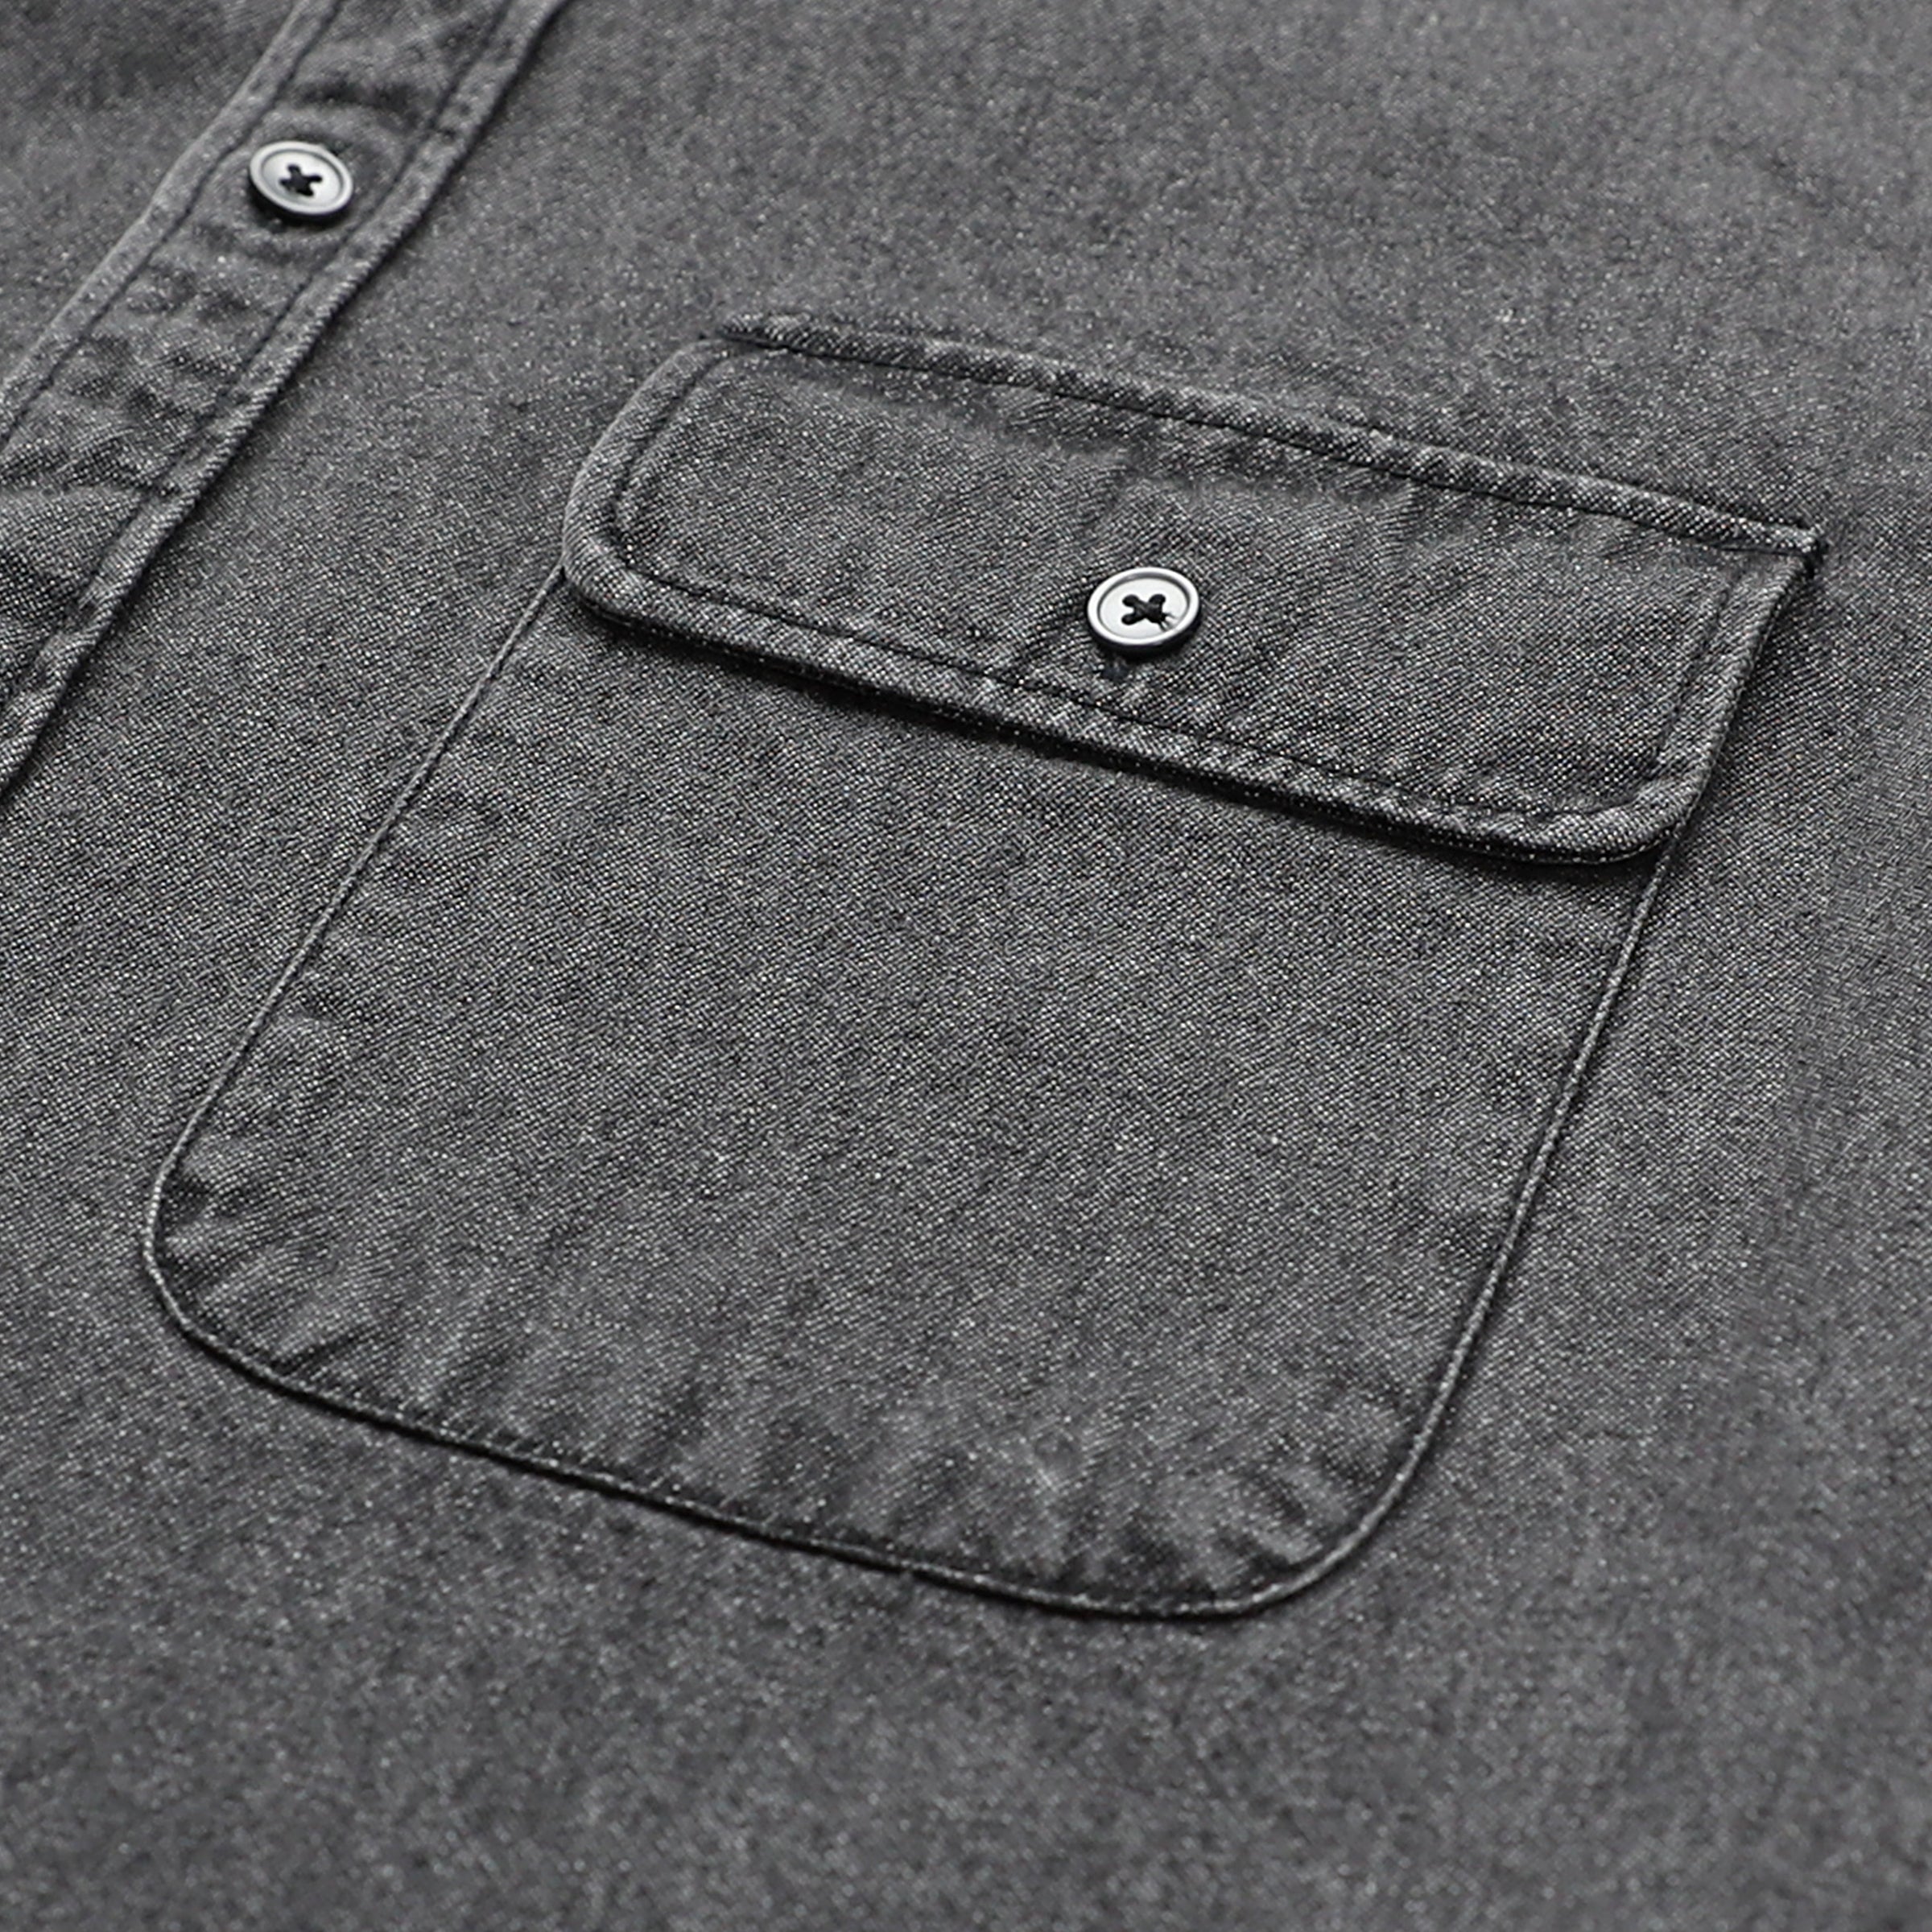 Mens Denim Shirts Button Down Short Sleeve Western Cotton Casual Work Jean Shirt #5503